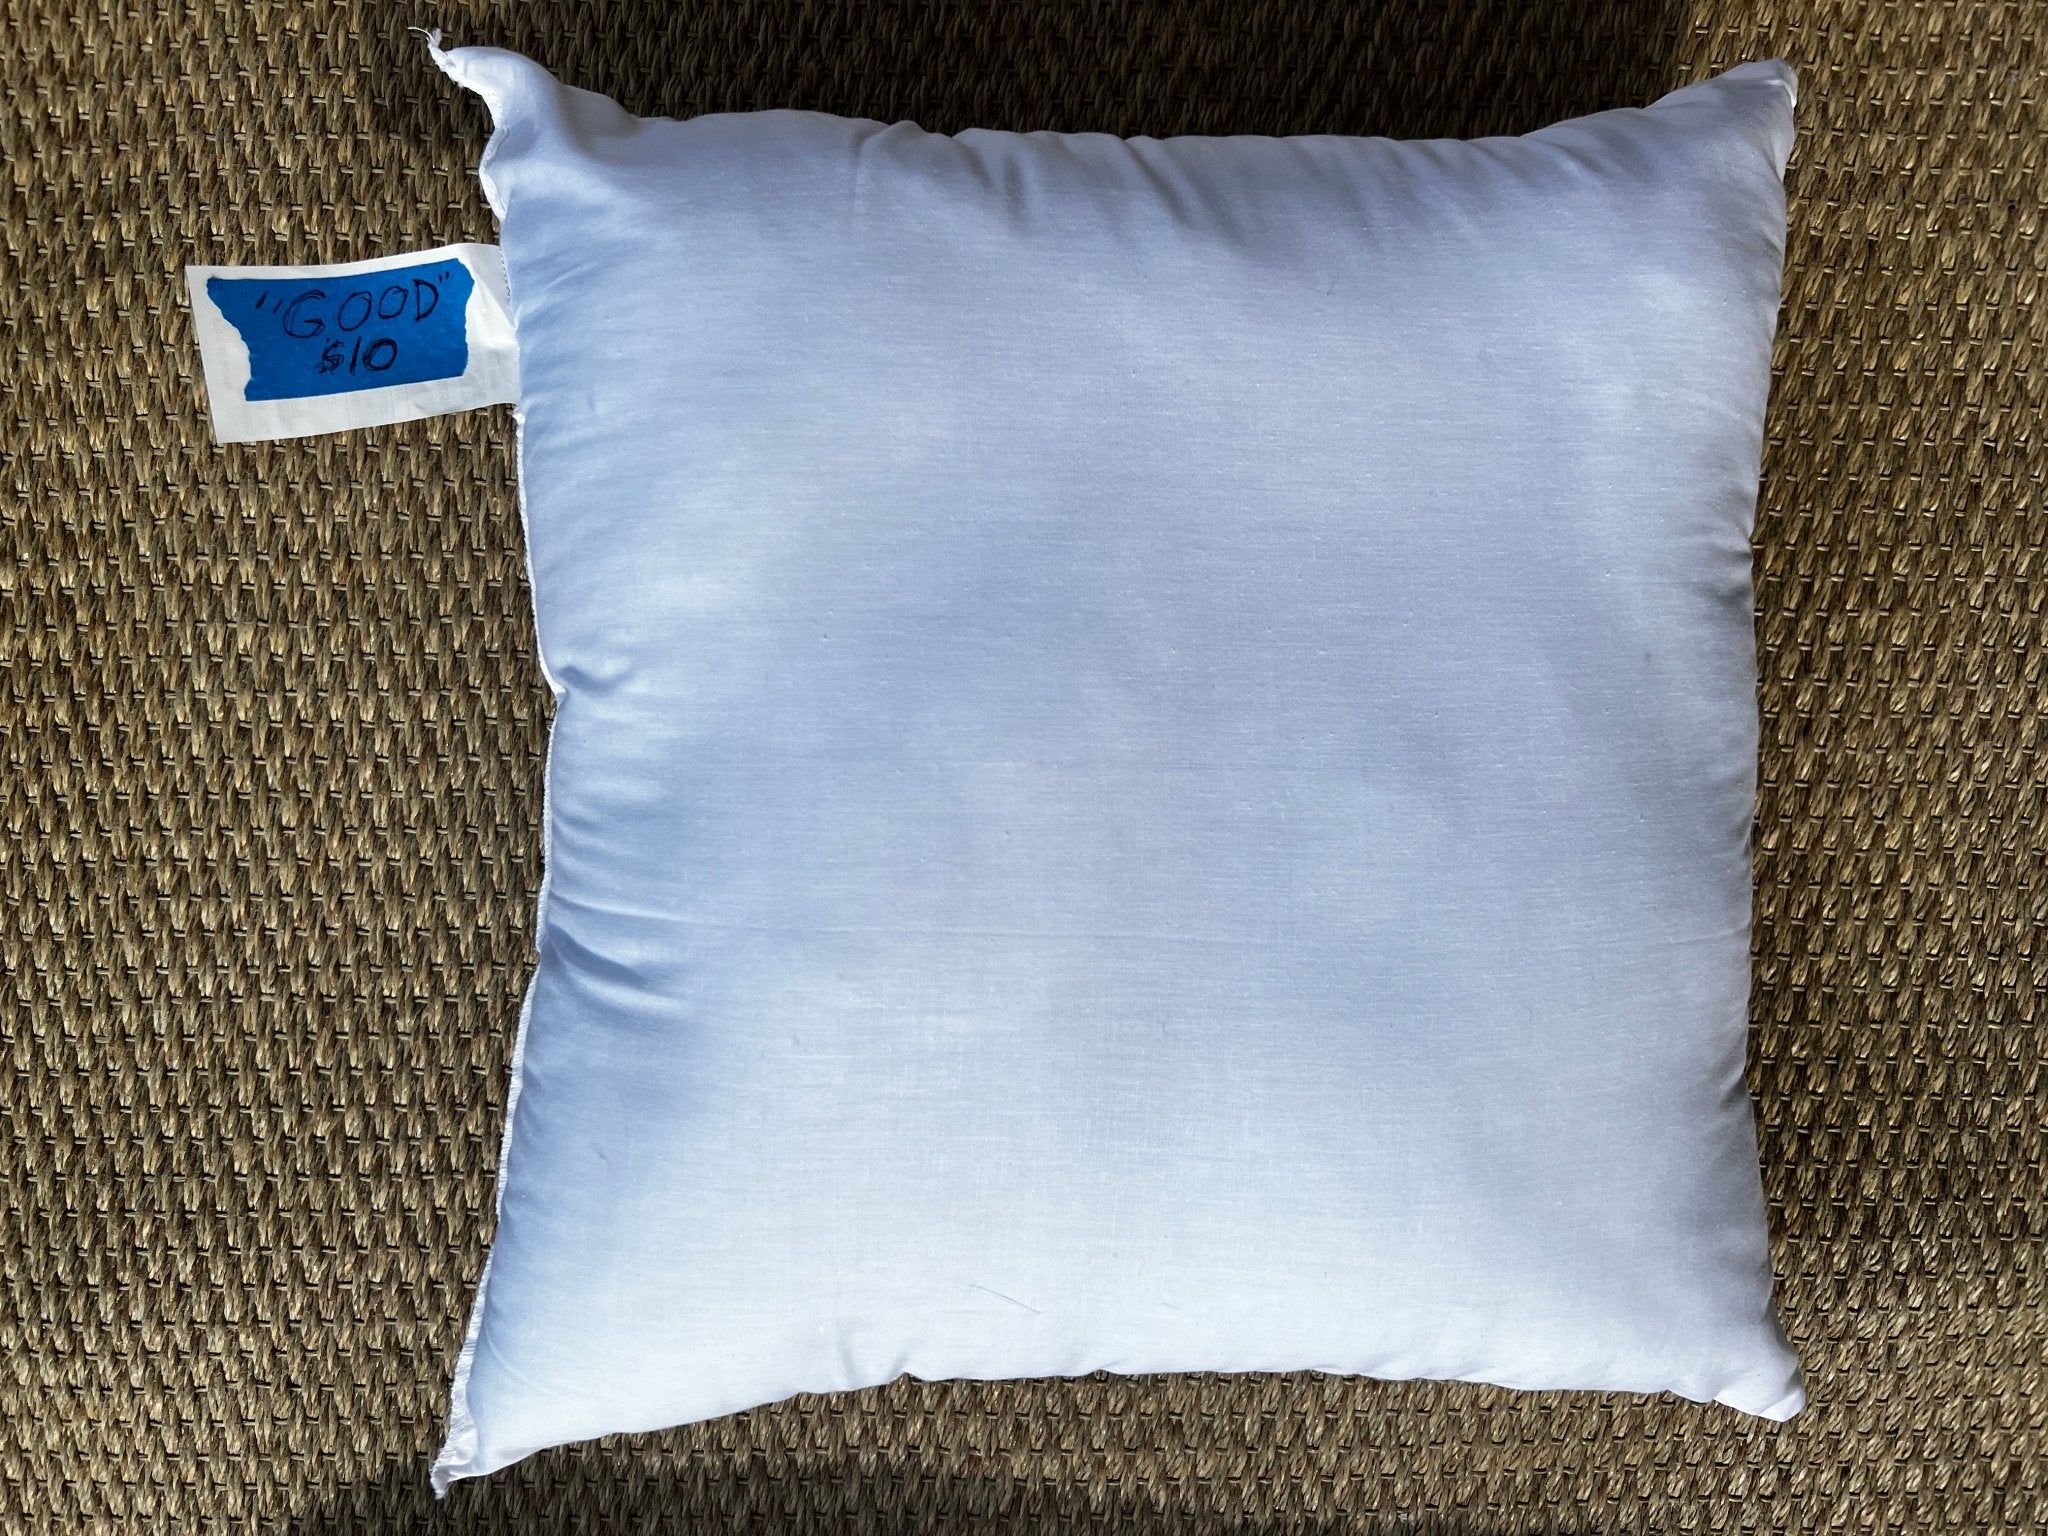 Pillow Insert - “Good” AKA Good’nuff | Banana Manor Rug Company